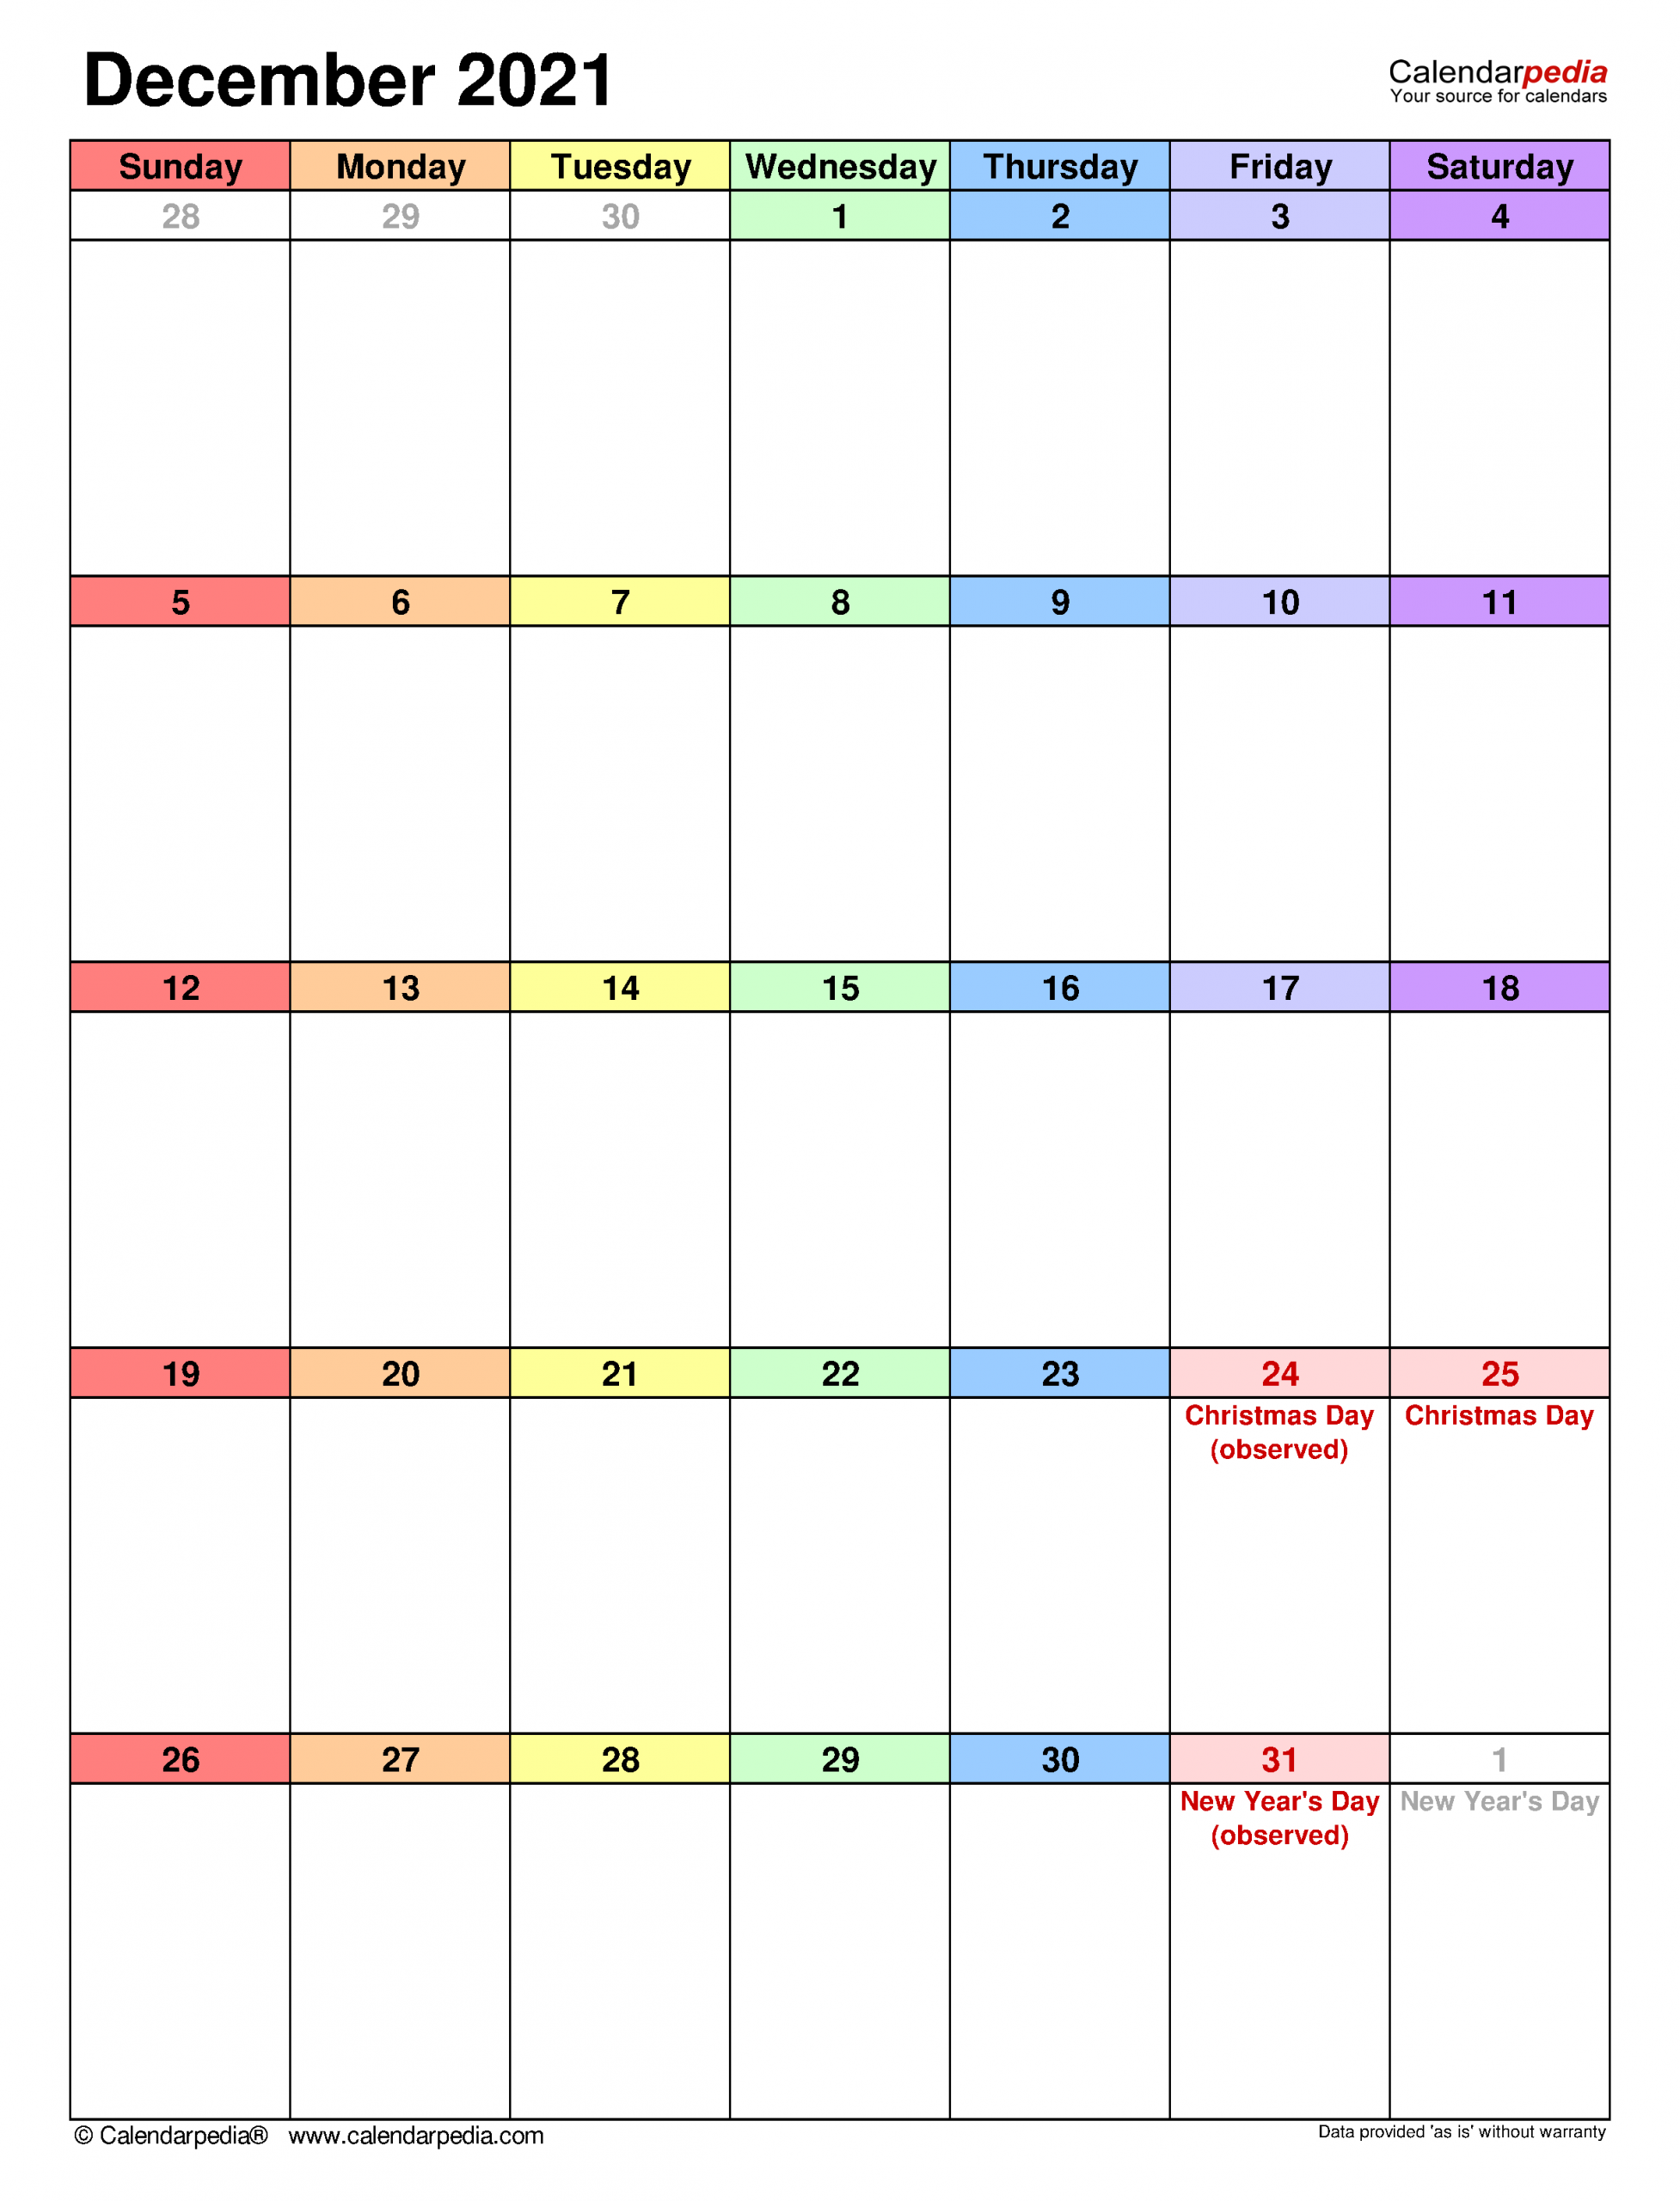 December 2021 Calendar | Templates For Word, Excel And Pdf Free December 2021 Calendar